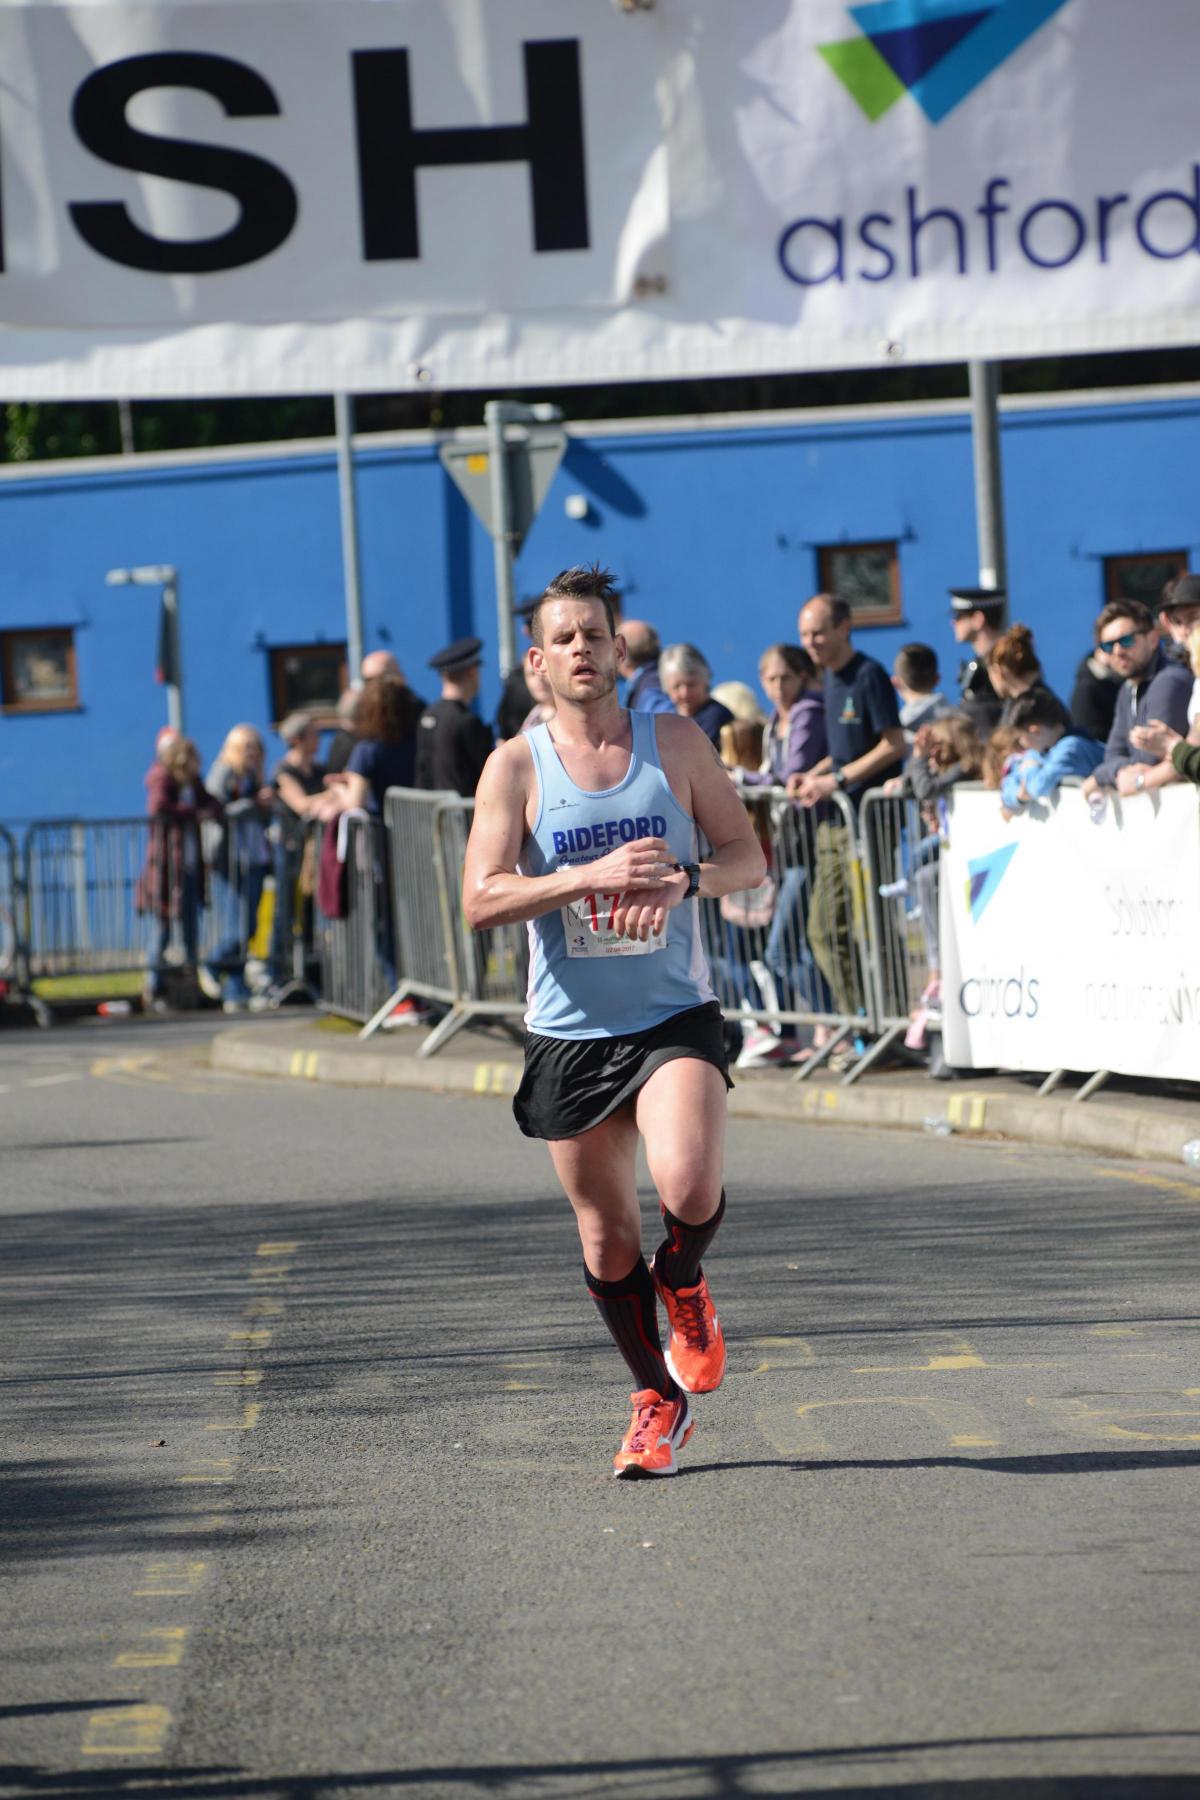 The runners taking part in Taunton Marathon, Half Marathon and Fun Run